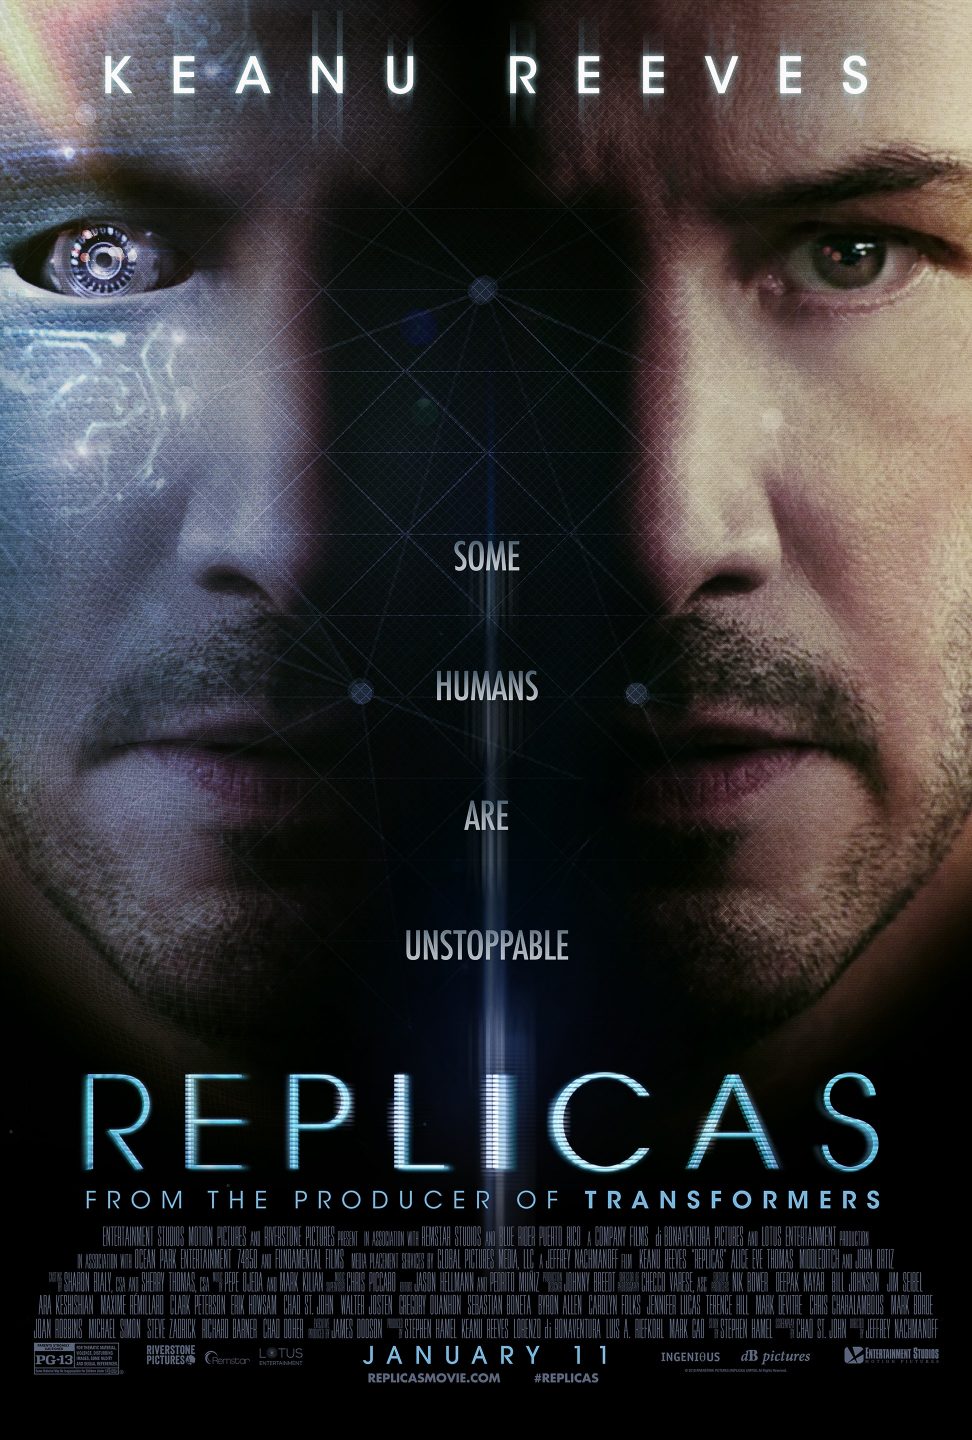 Replicas poster (Entertainment Studios Motion Pictures)